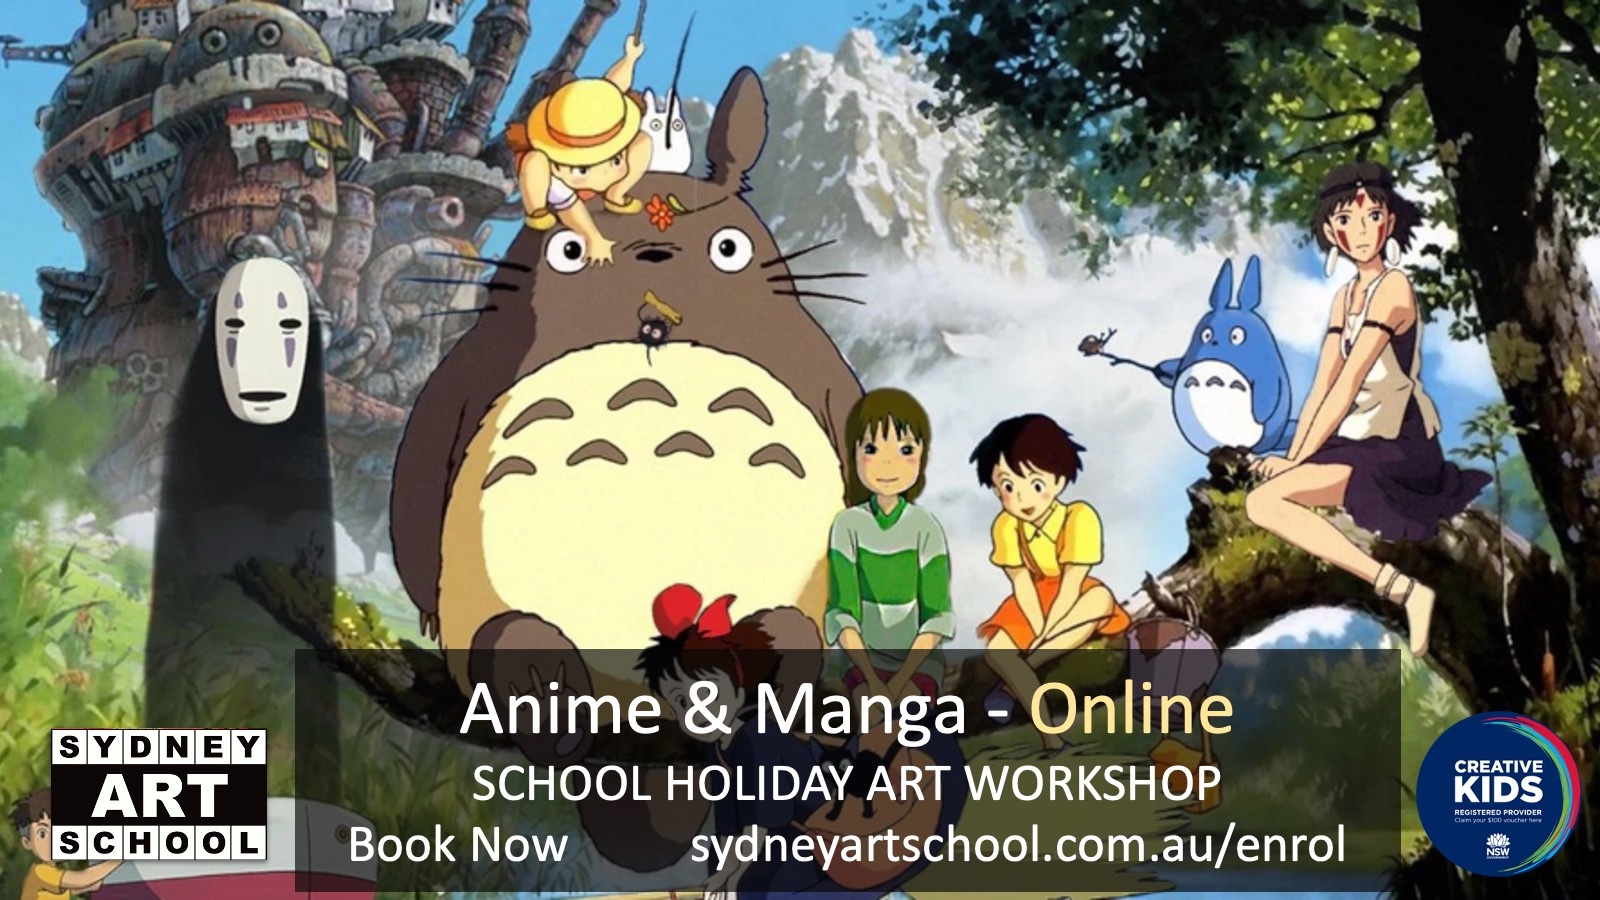 Sydney Art School Holiday Art Workshop Anime & Manga Online